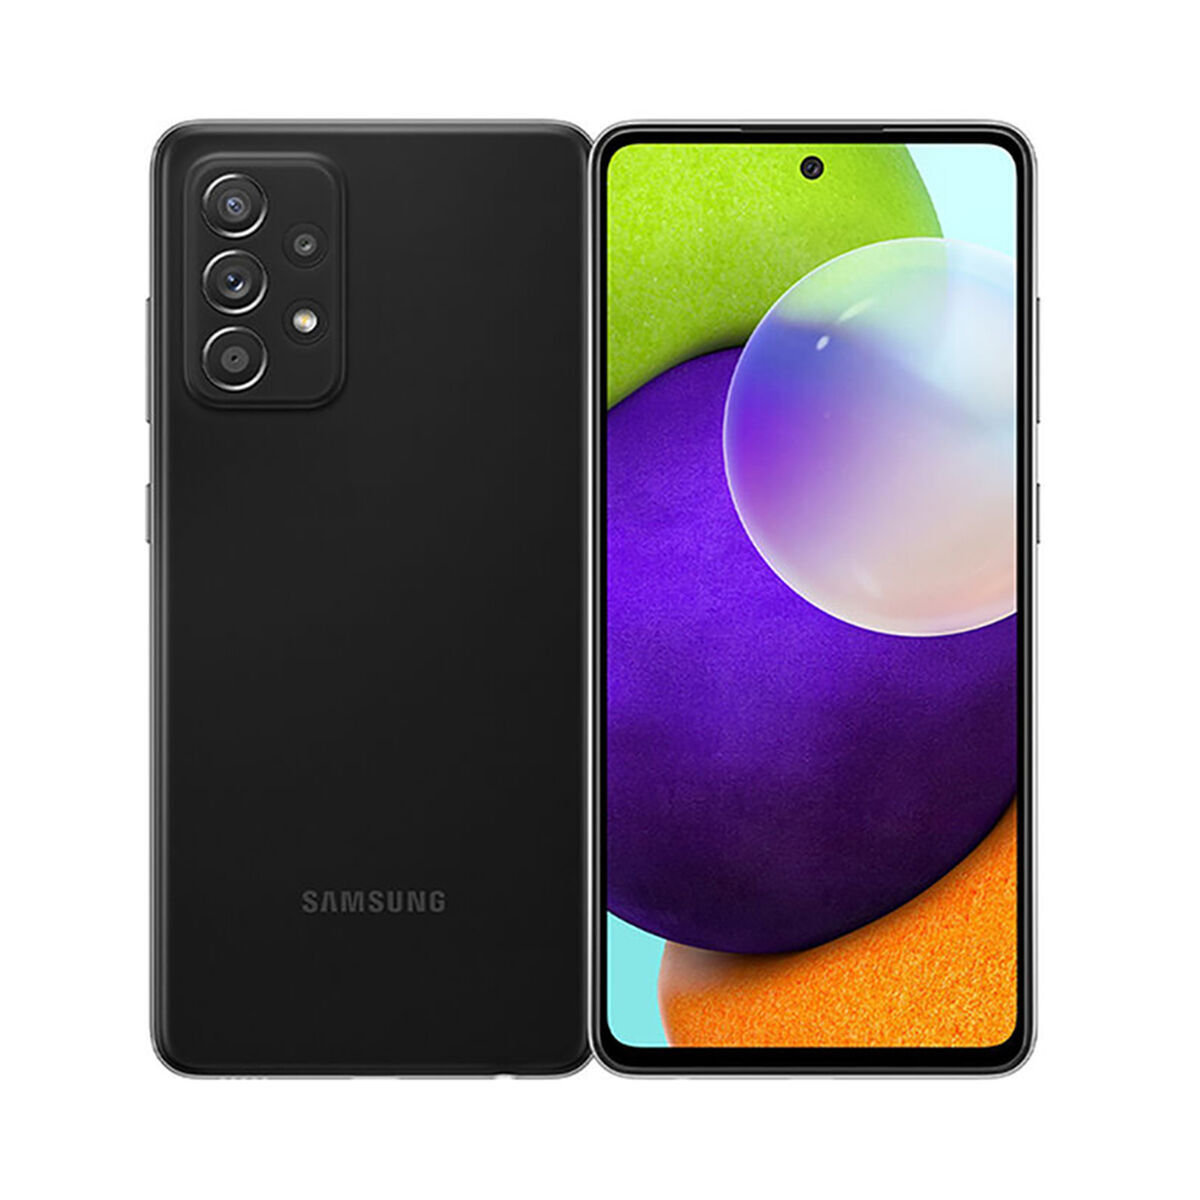 Combo Celular Samsung Galaxy A52 LTE 128GB 6,5" Awesome Black Liberado + Audífonos Bluetooth Galaxy Buds2 Graphite + Cargador 15W USB Flat TA Fast Charge